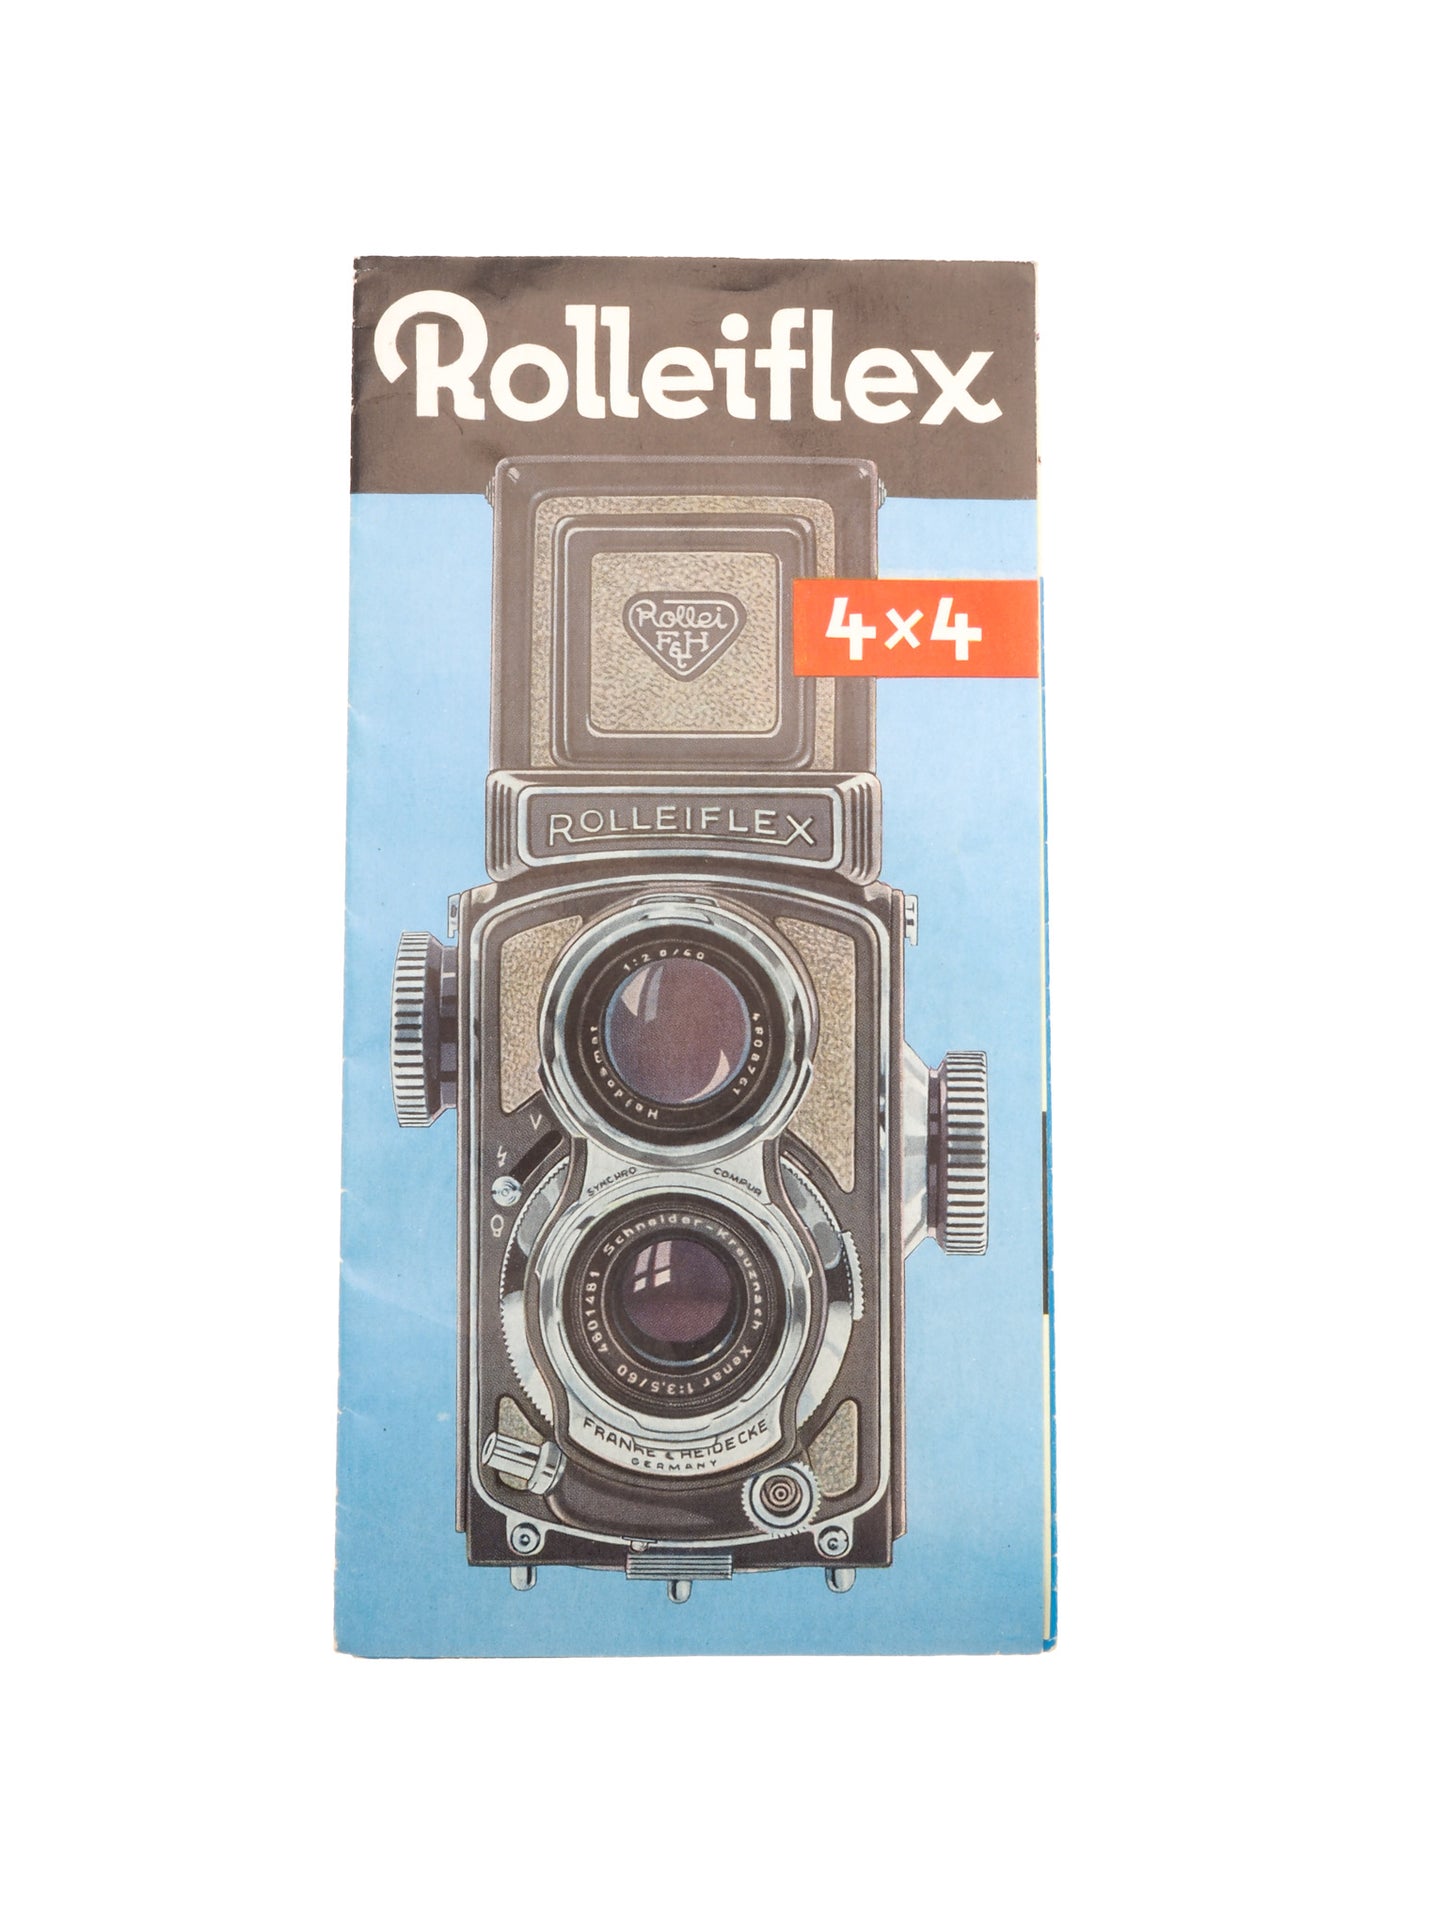 Rollei Rolleiflex 4x4 Instructions - Accessory